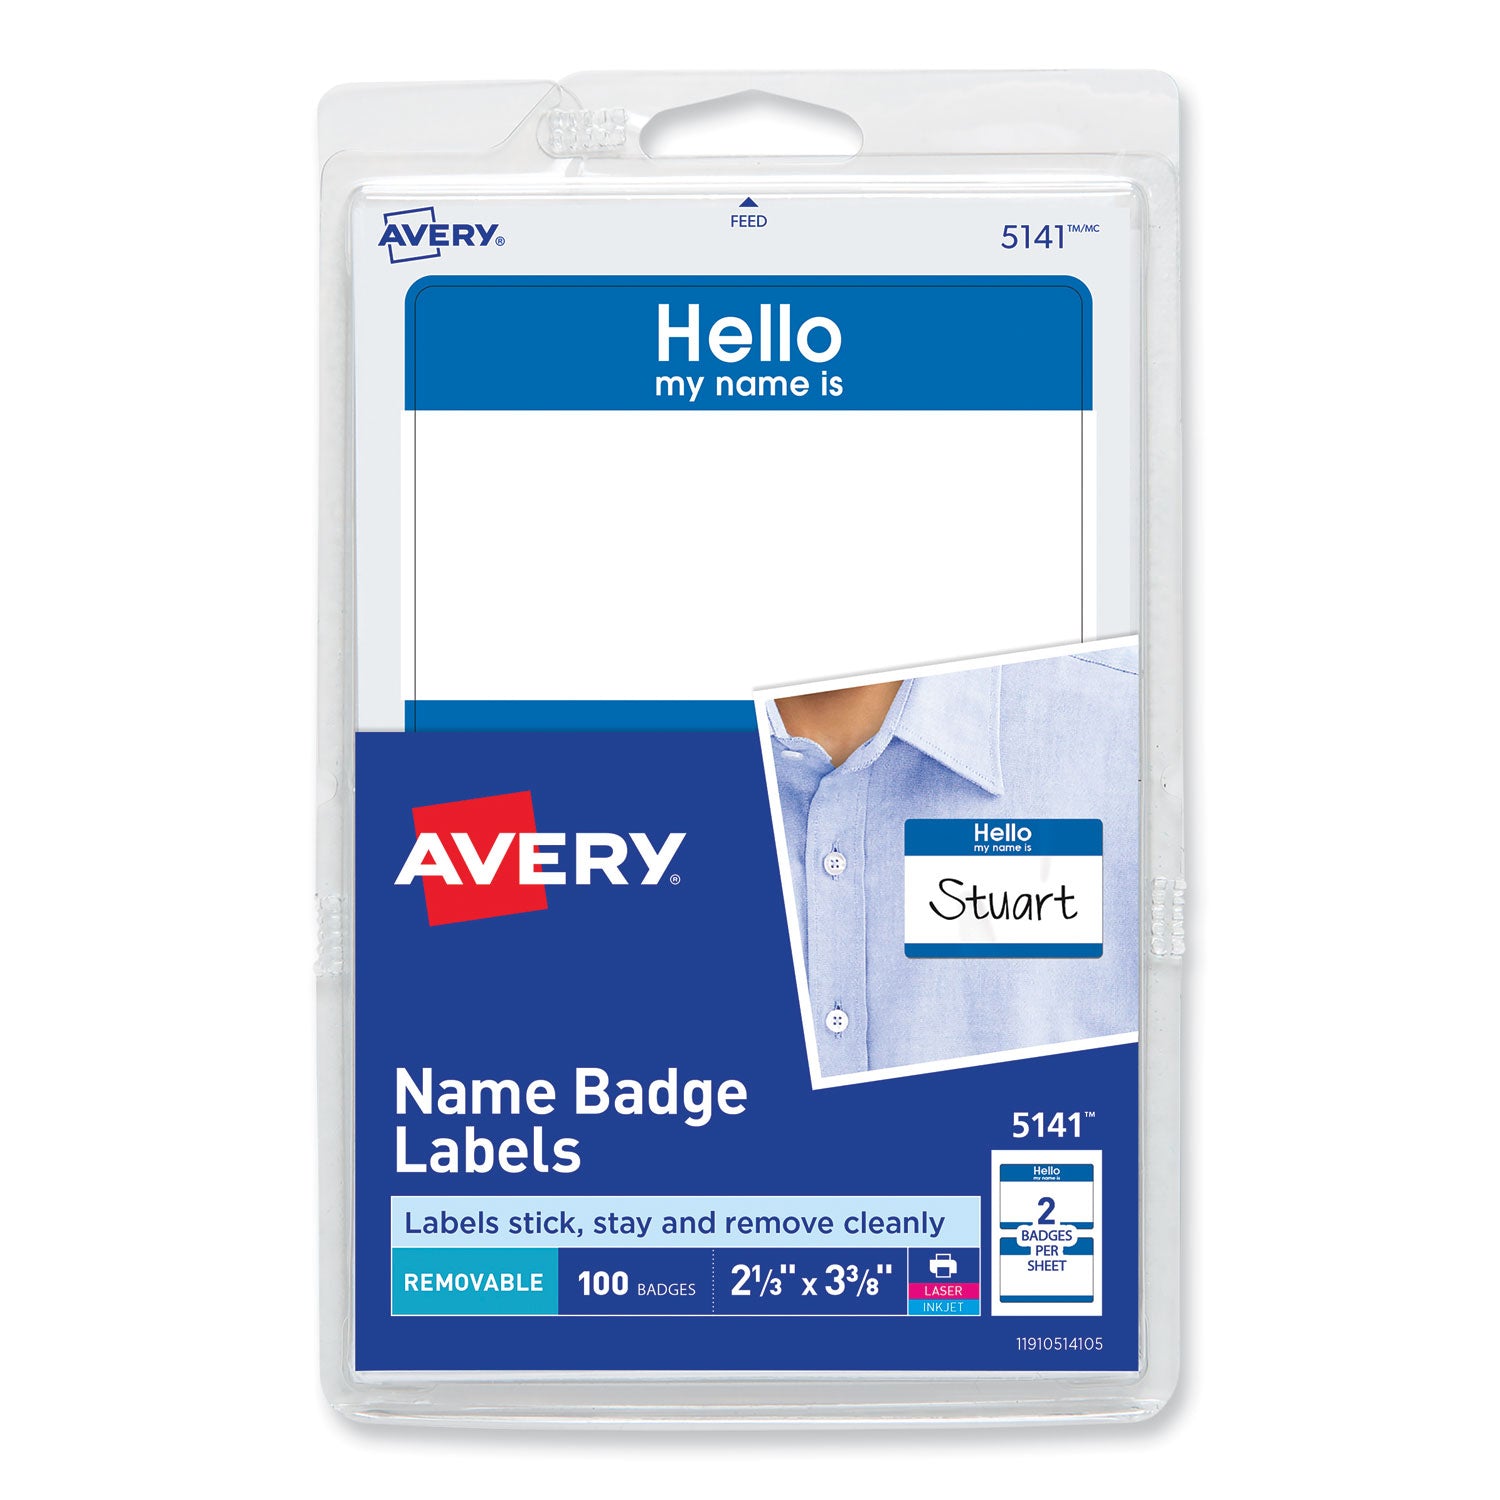 Printable Adhesive Name Badges, 3.38 x 2.33, Blue "Hello", 100/Pack - 